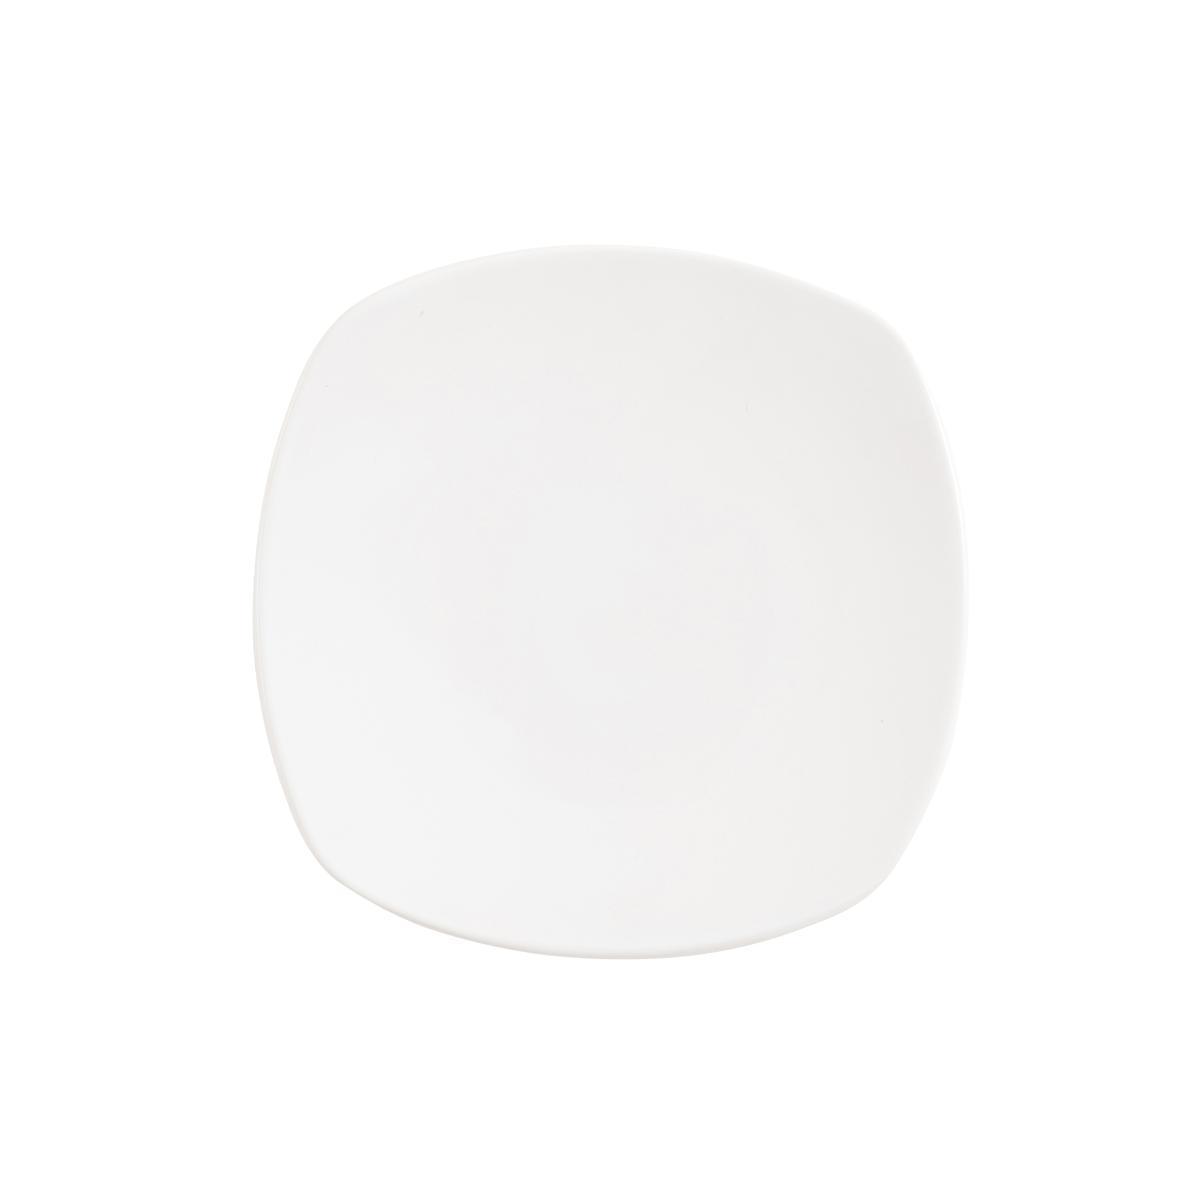 Assiette plate - 20 x 20 cm - Blanc